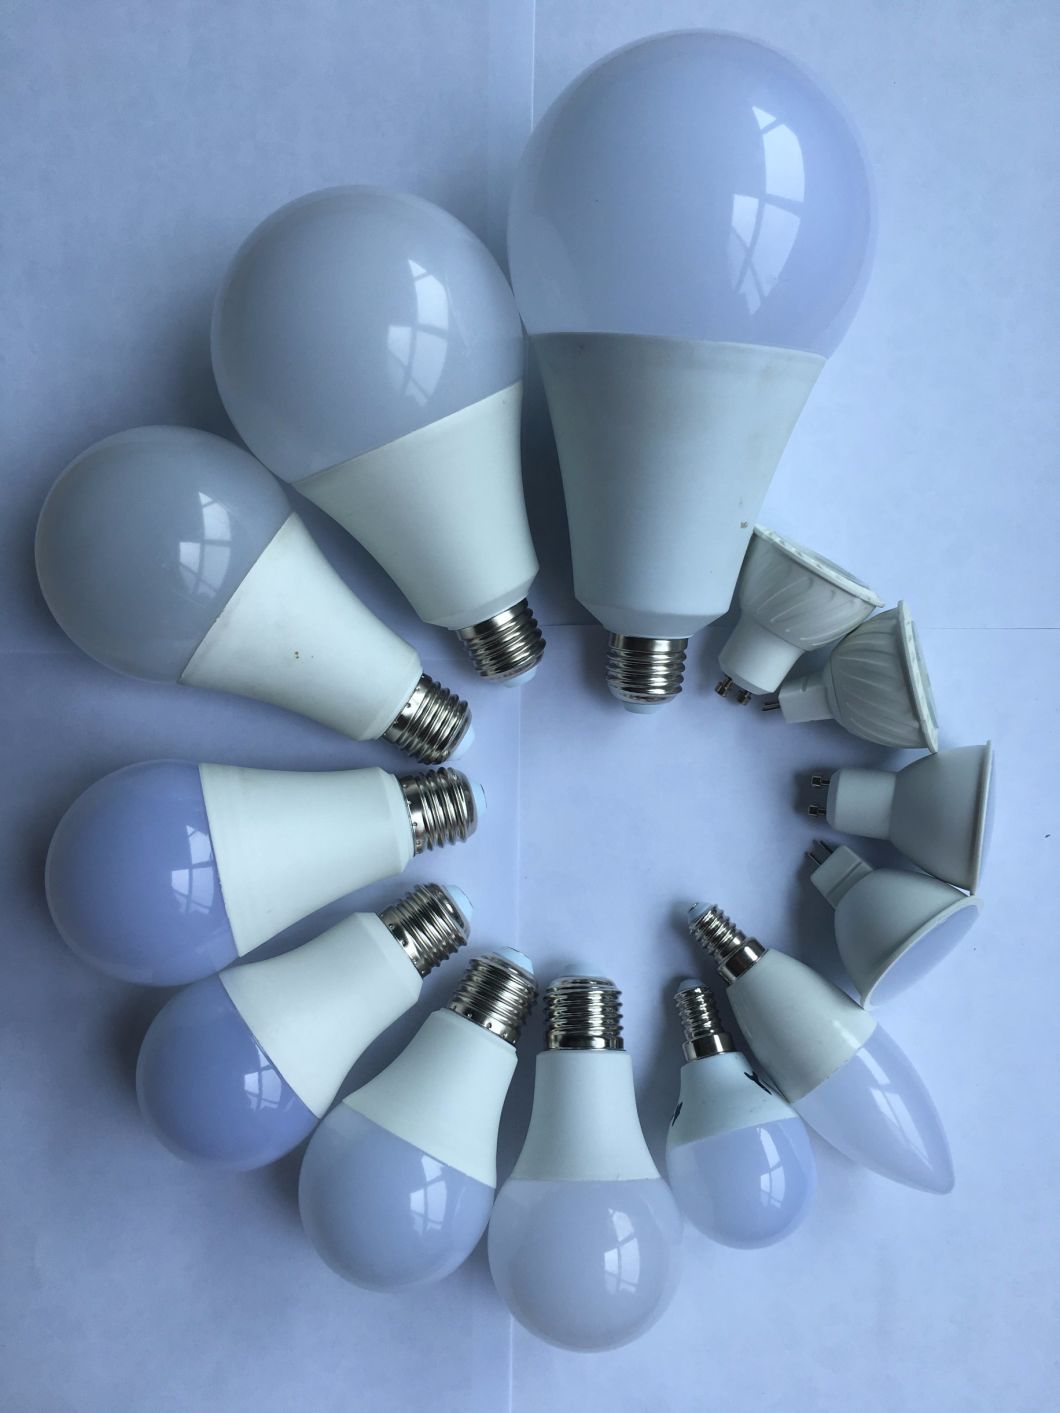 10years Manufacture Factory A60 7W9w12W15W18W20W Energy Saving LED Bulb Light